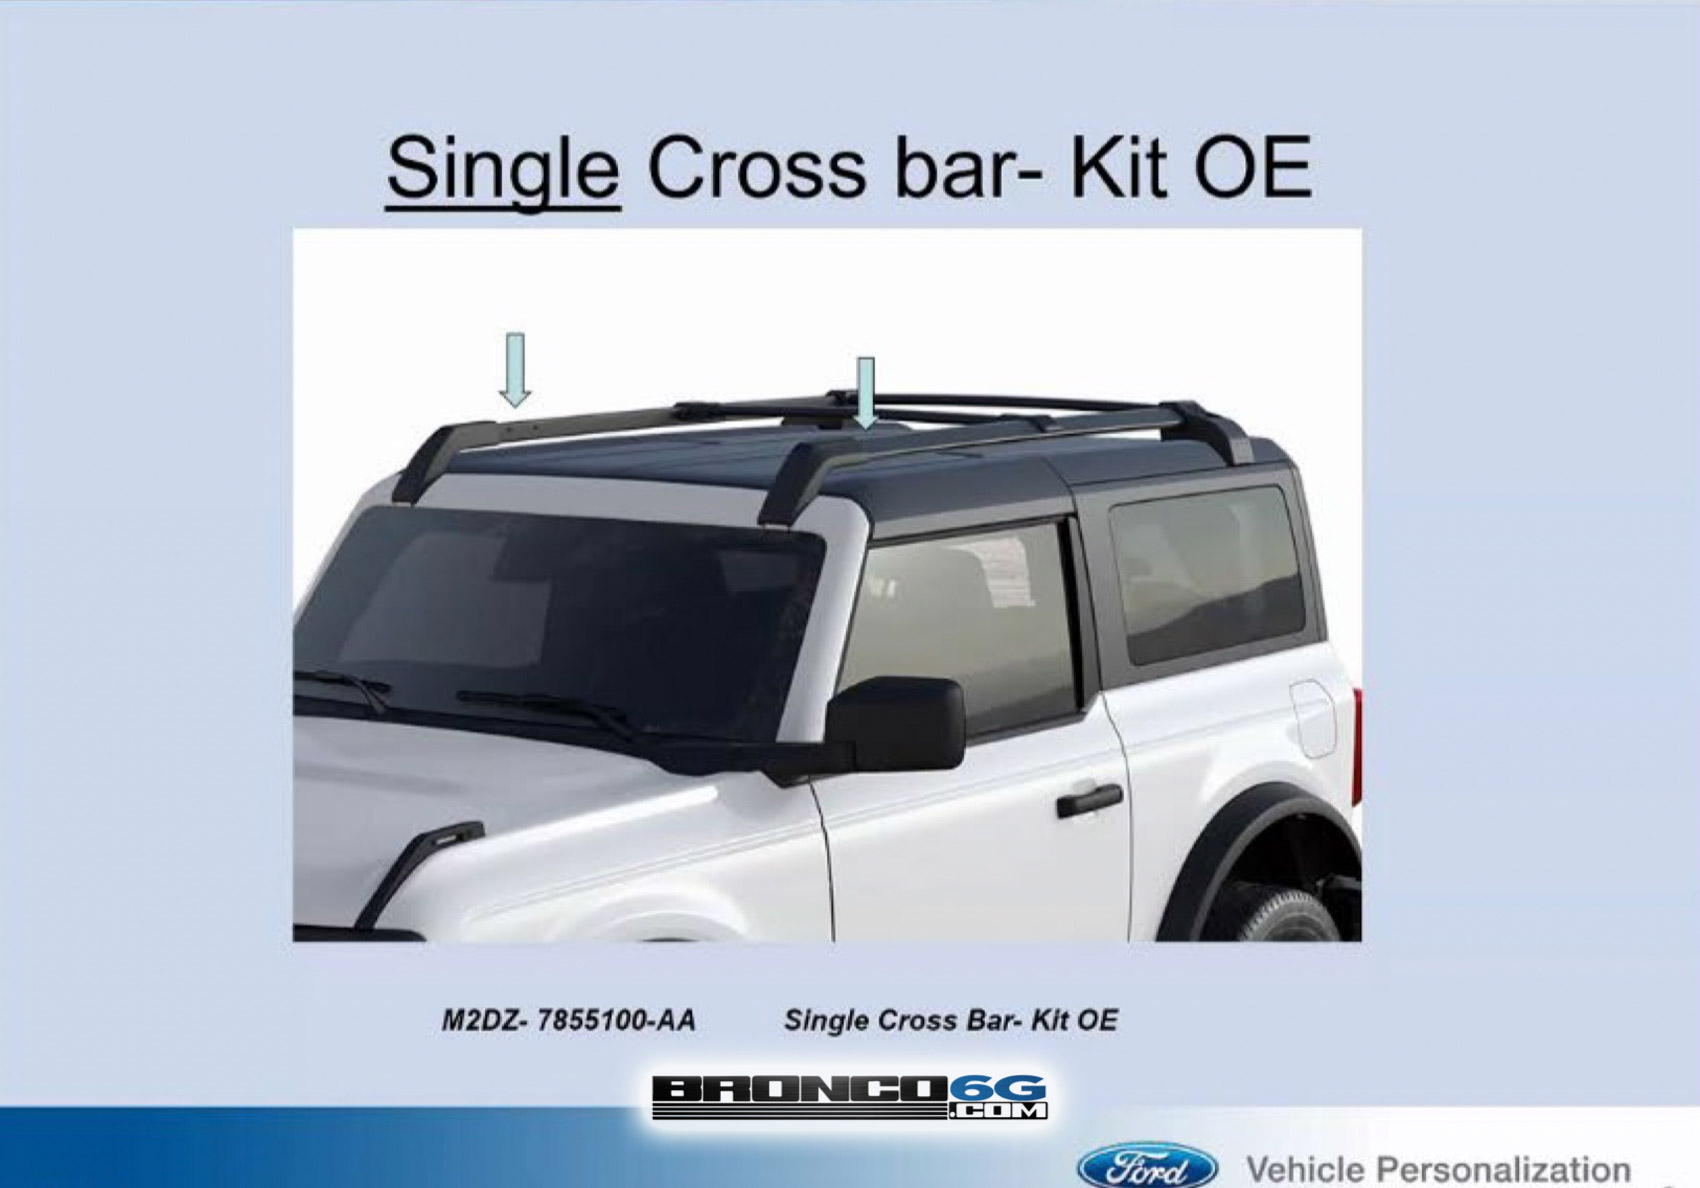 2021 Bronco single cross bar kit Ford Performance OEM factory accessory.jpg